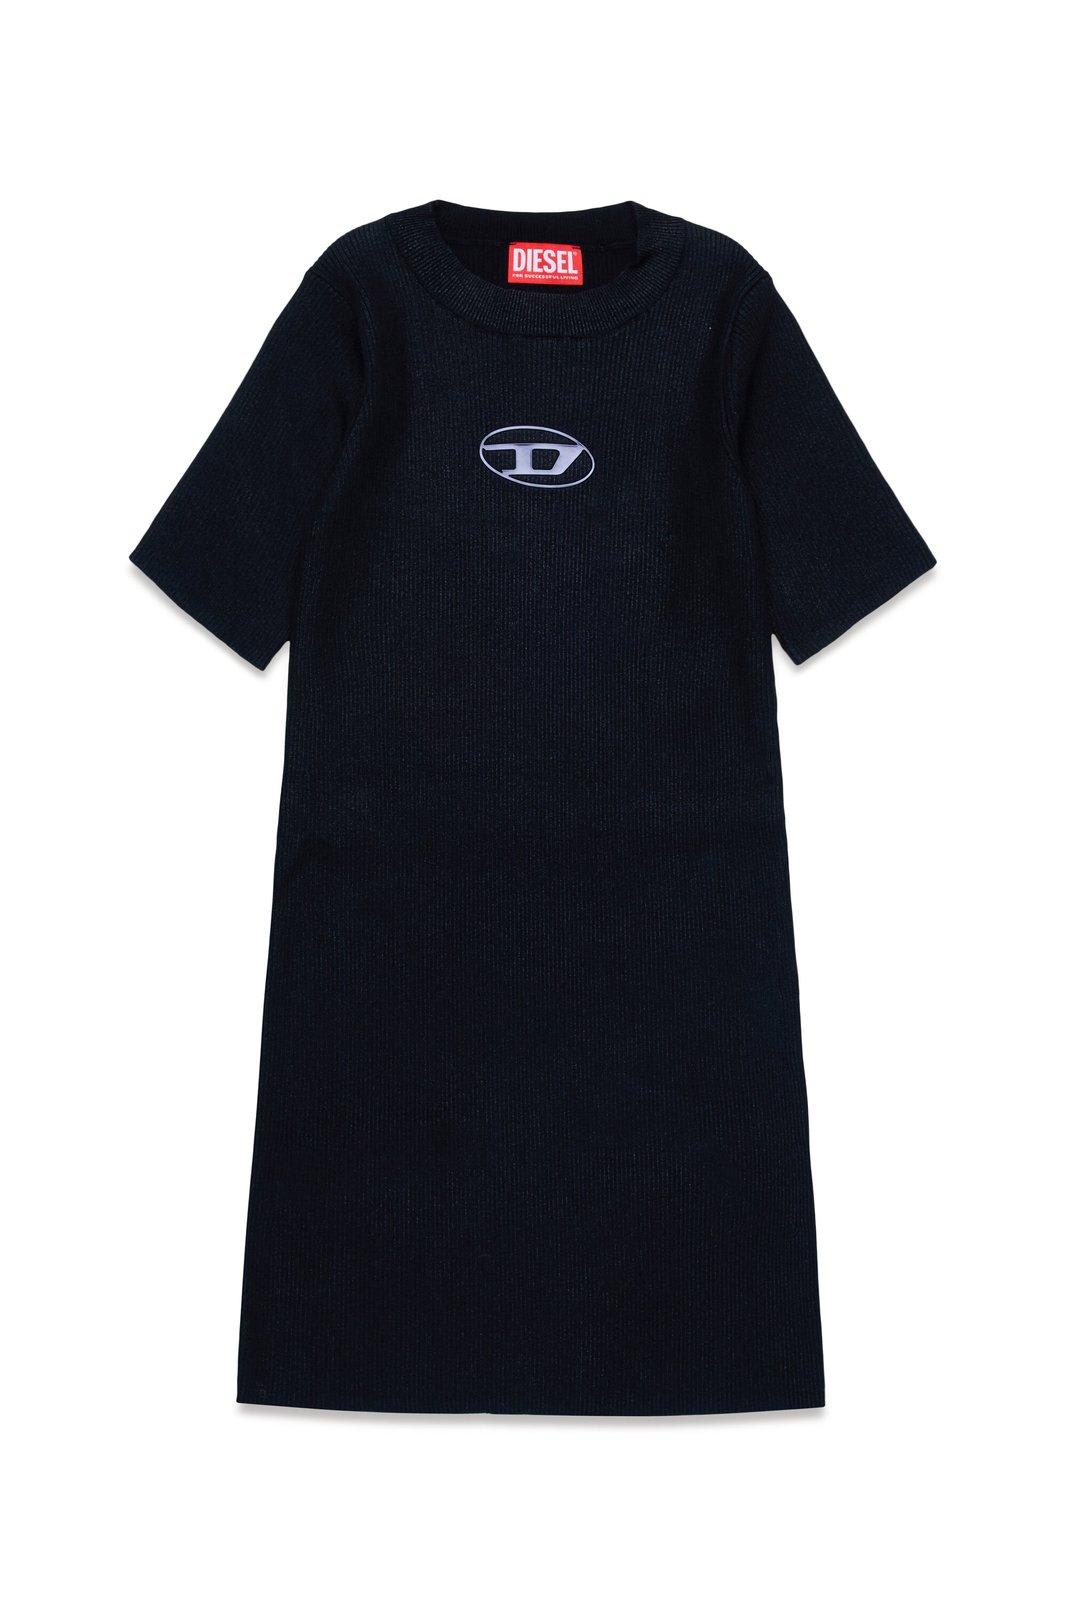 Diesel Kids' Desmi Logo Cut-out Ribbed Dress In Nero